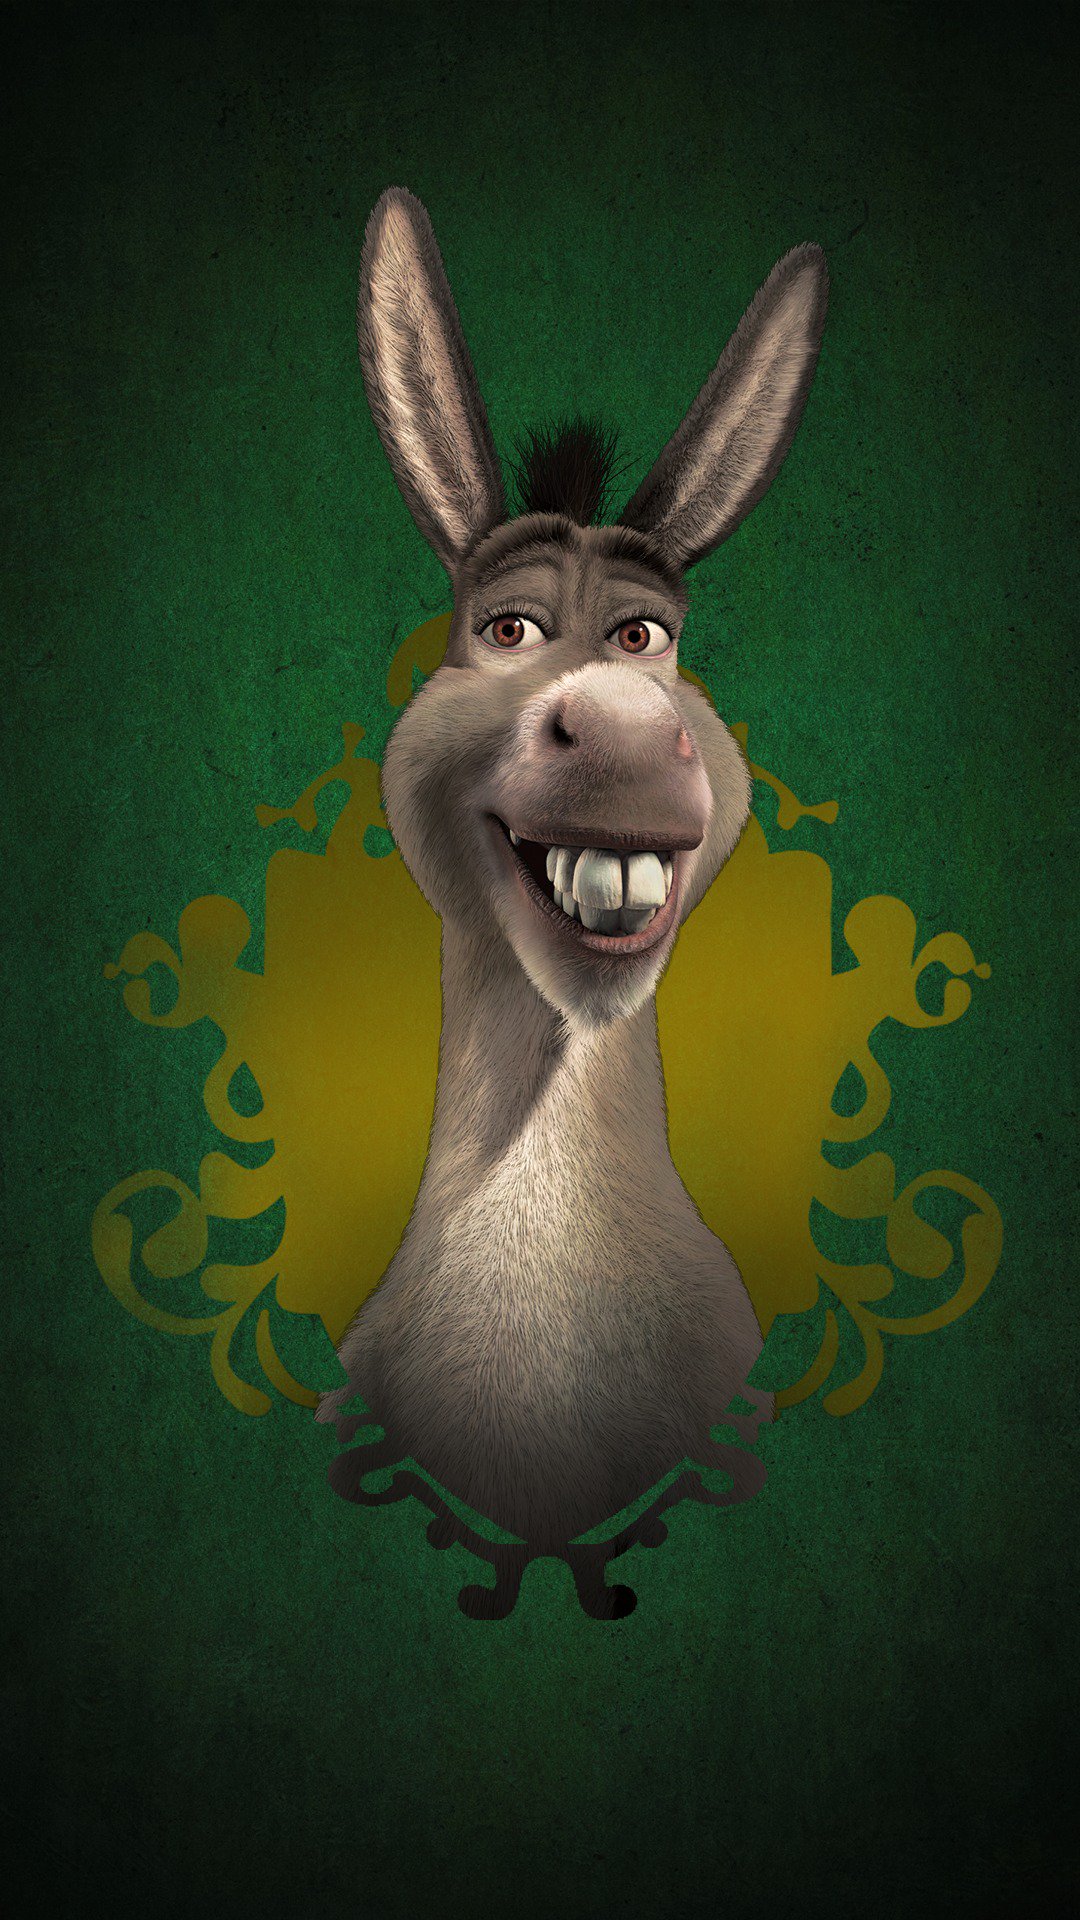 DreamWorks Animation Your Favorite Wallpaper To Shrek Ify Your Phone Background! #Shrek